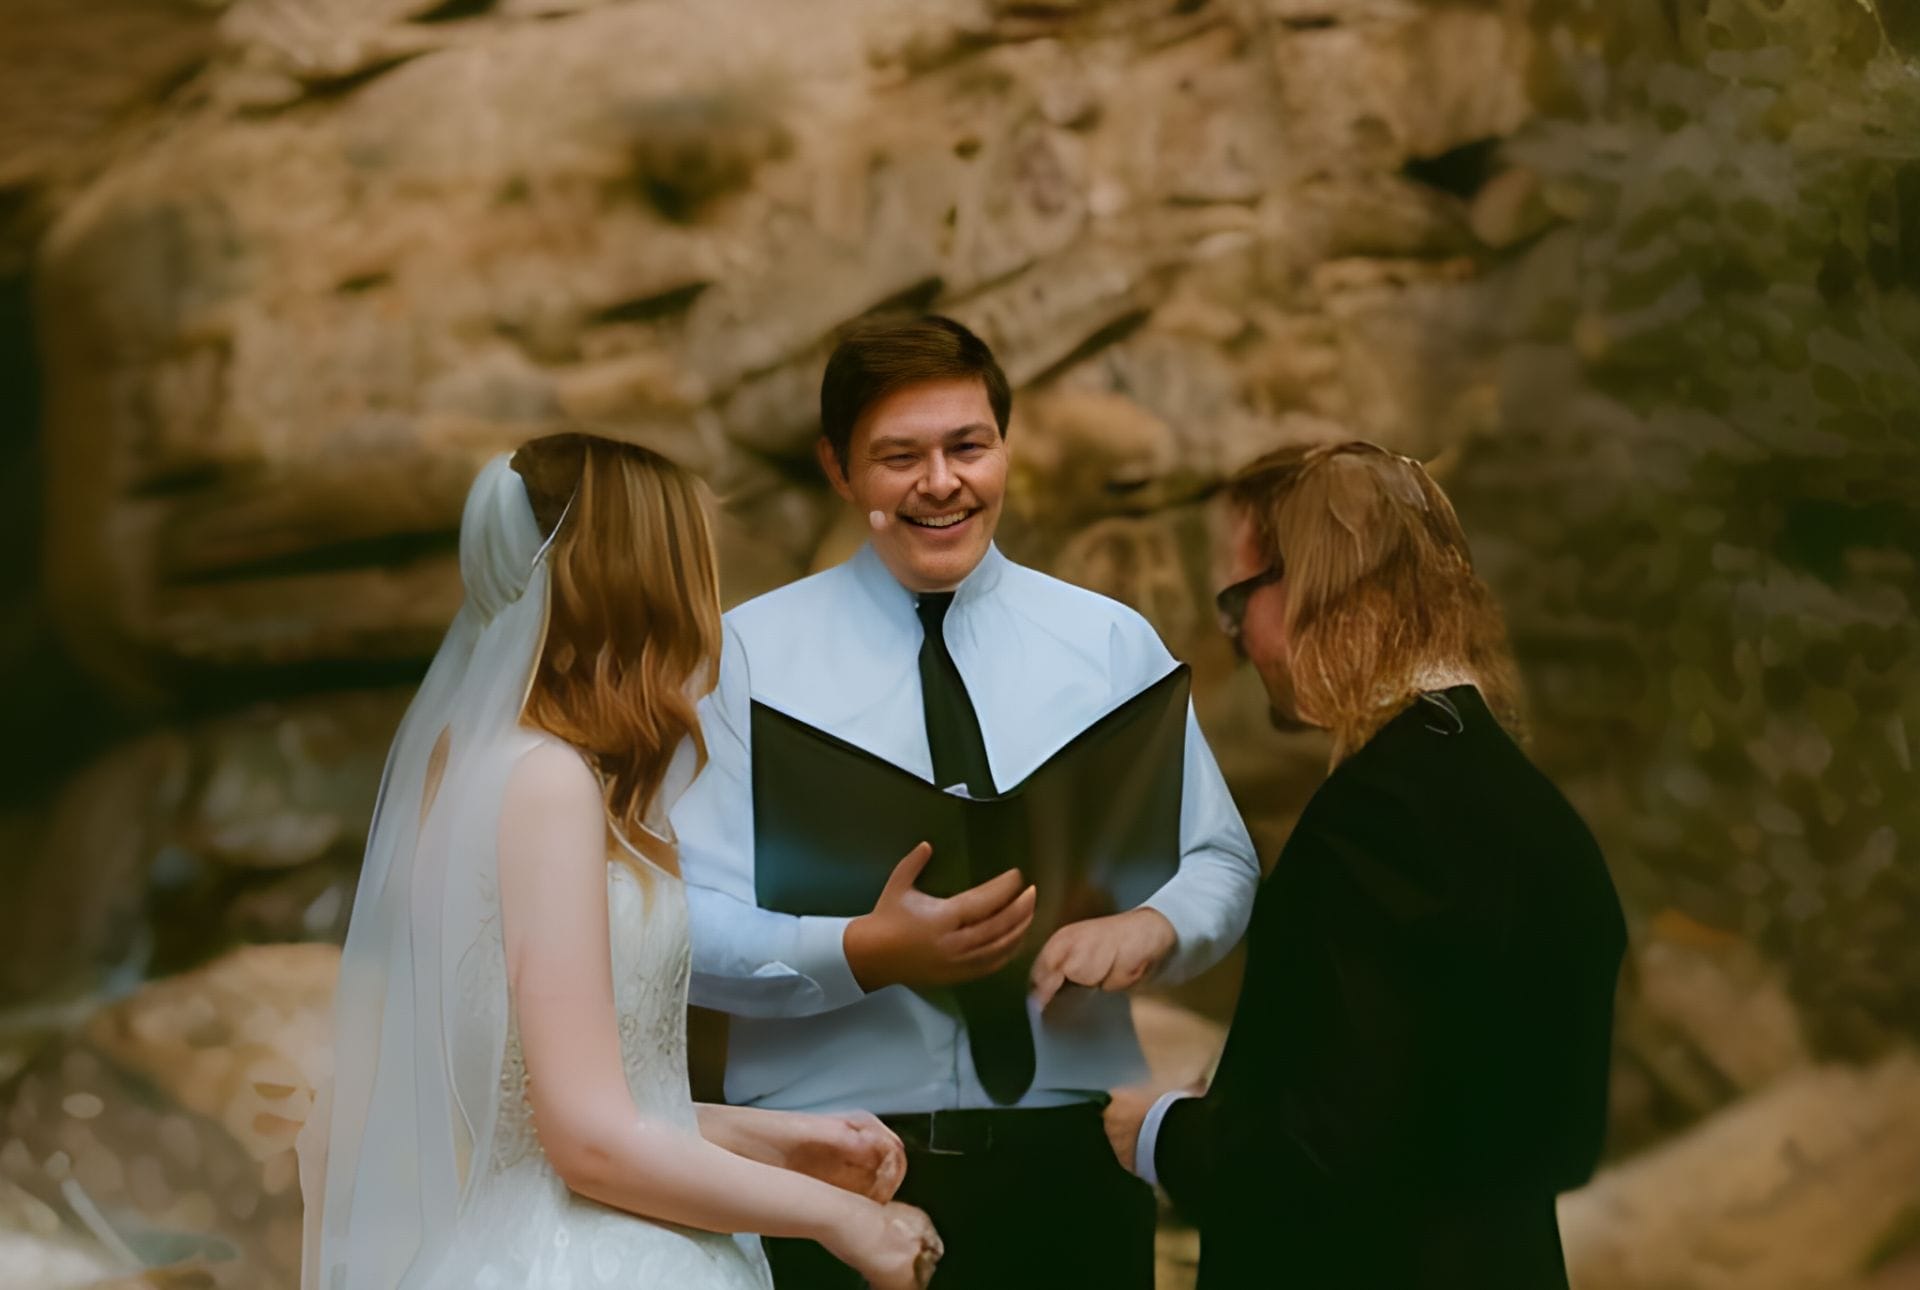 Rev. Justin Haskew North Georgia Wedding Officiant